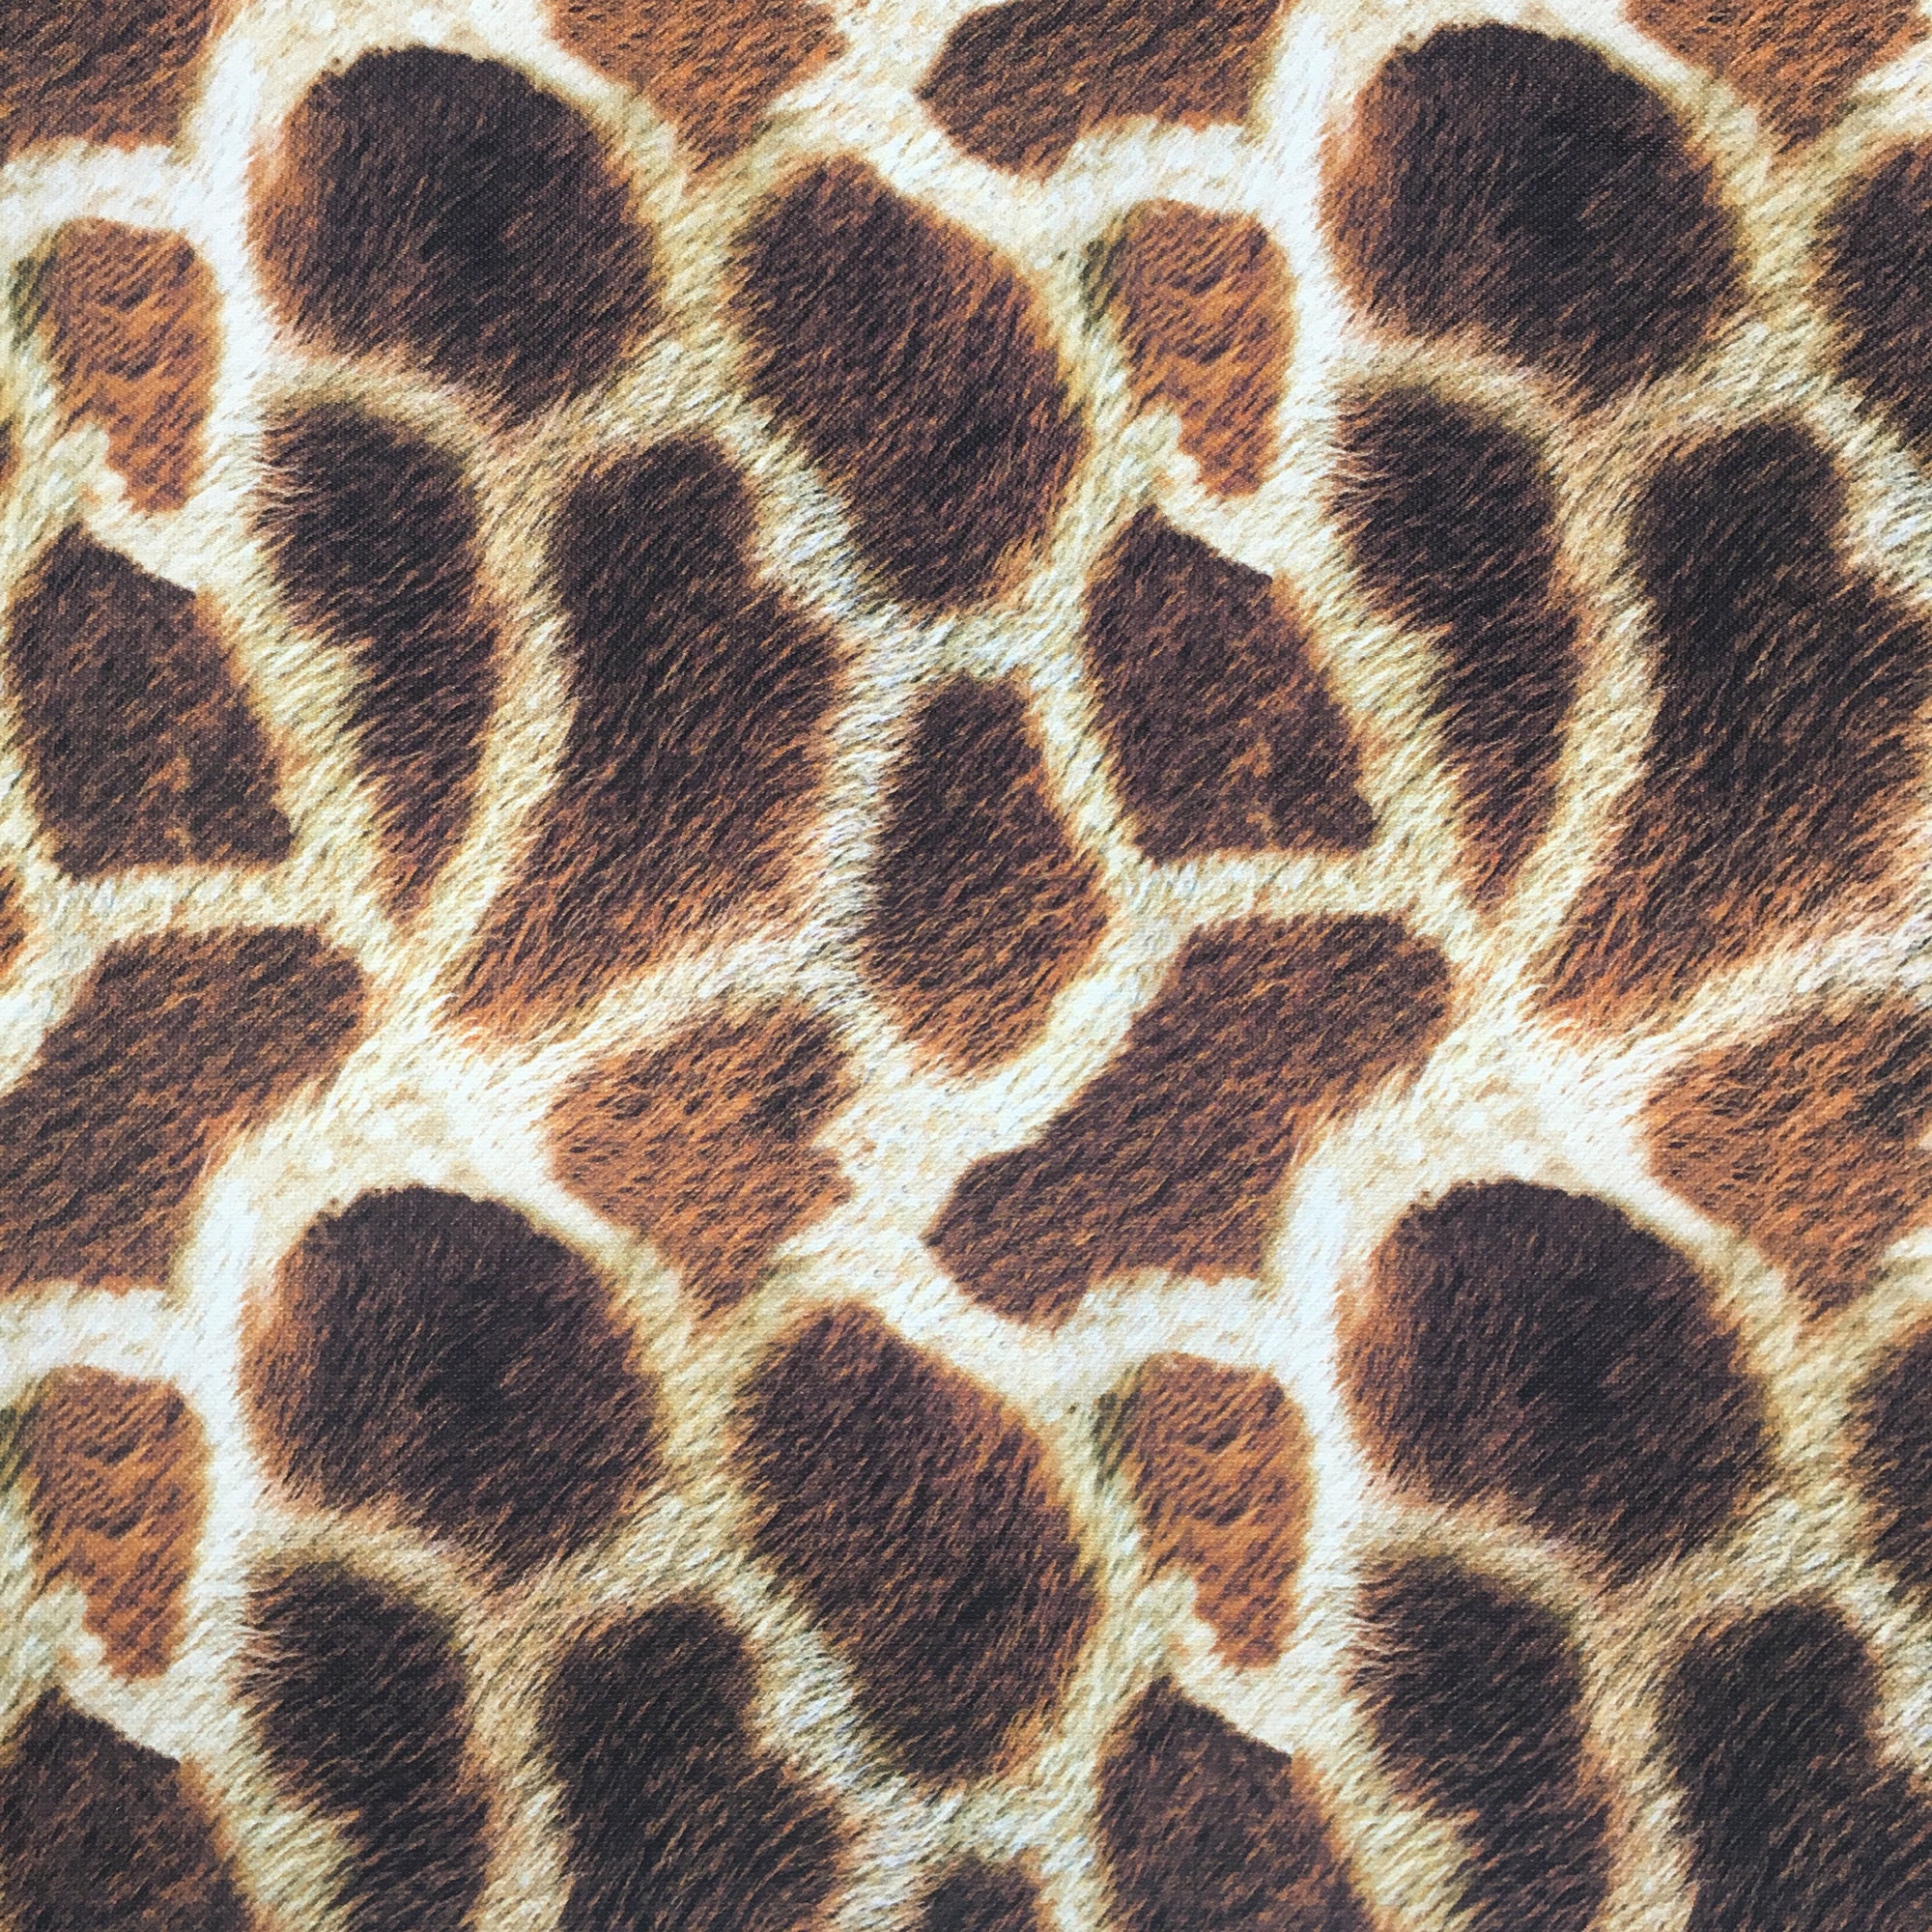 Giraffe Print Fabric by the Yard Brown Animal Fur Pattern - Etsy